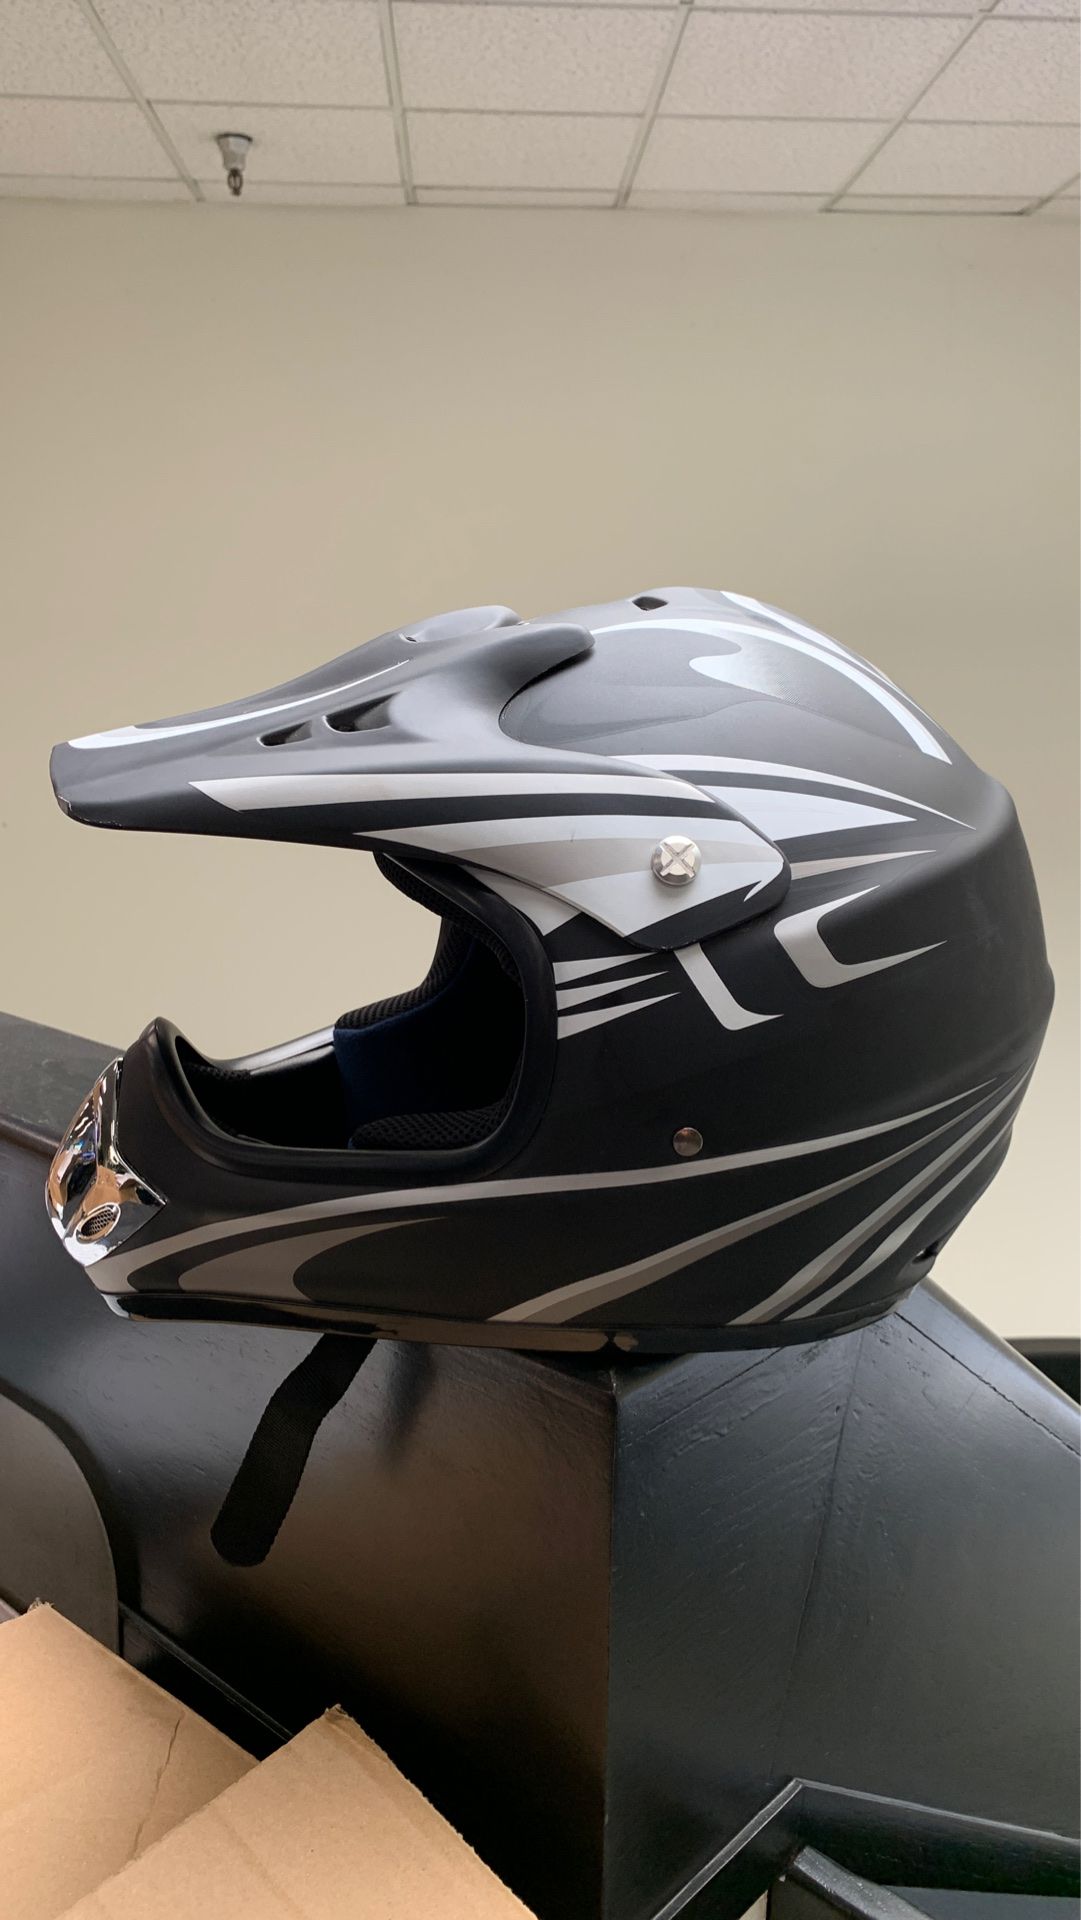 Motorcross Motorcycle Bike Kylin Helmet - Ky-128 size Medium